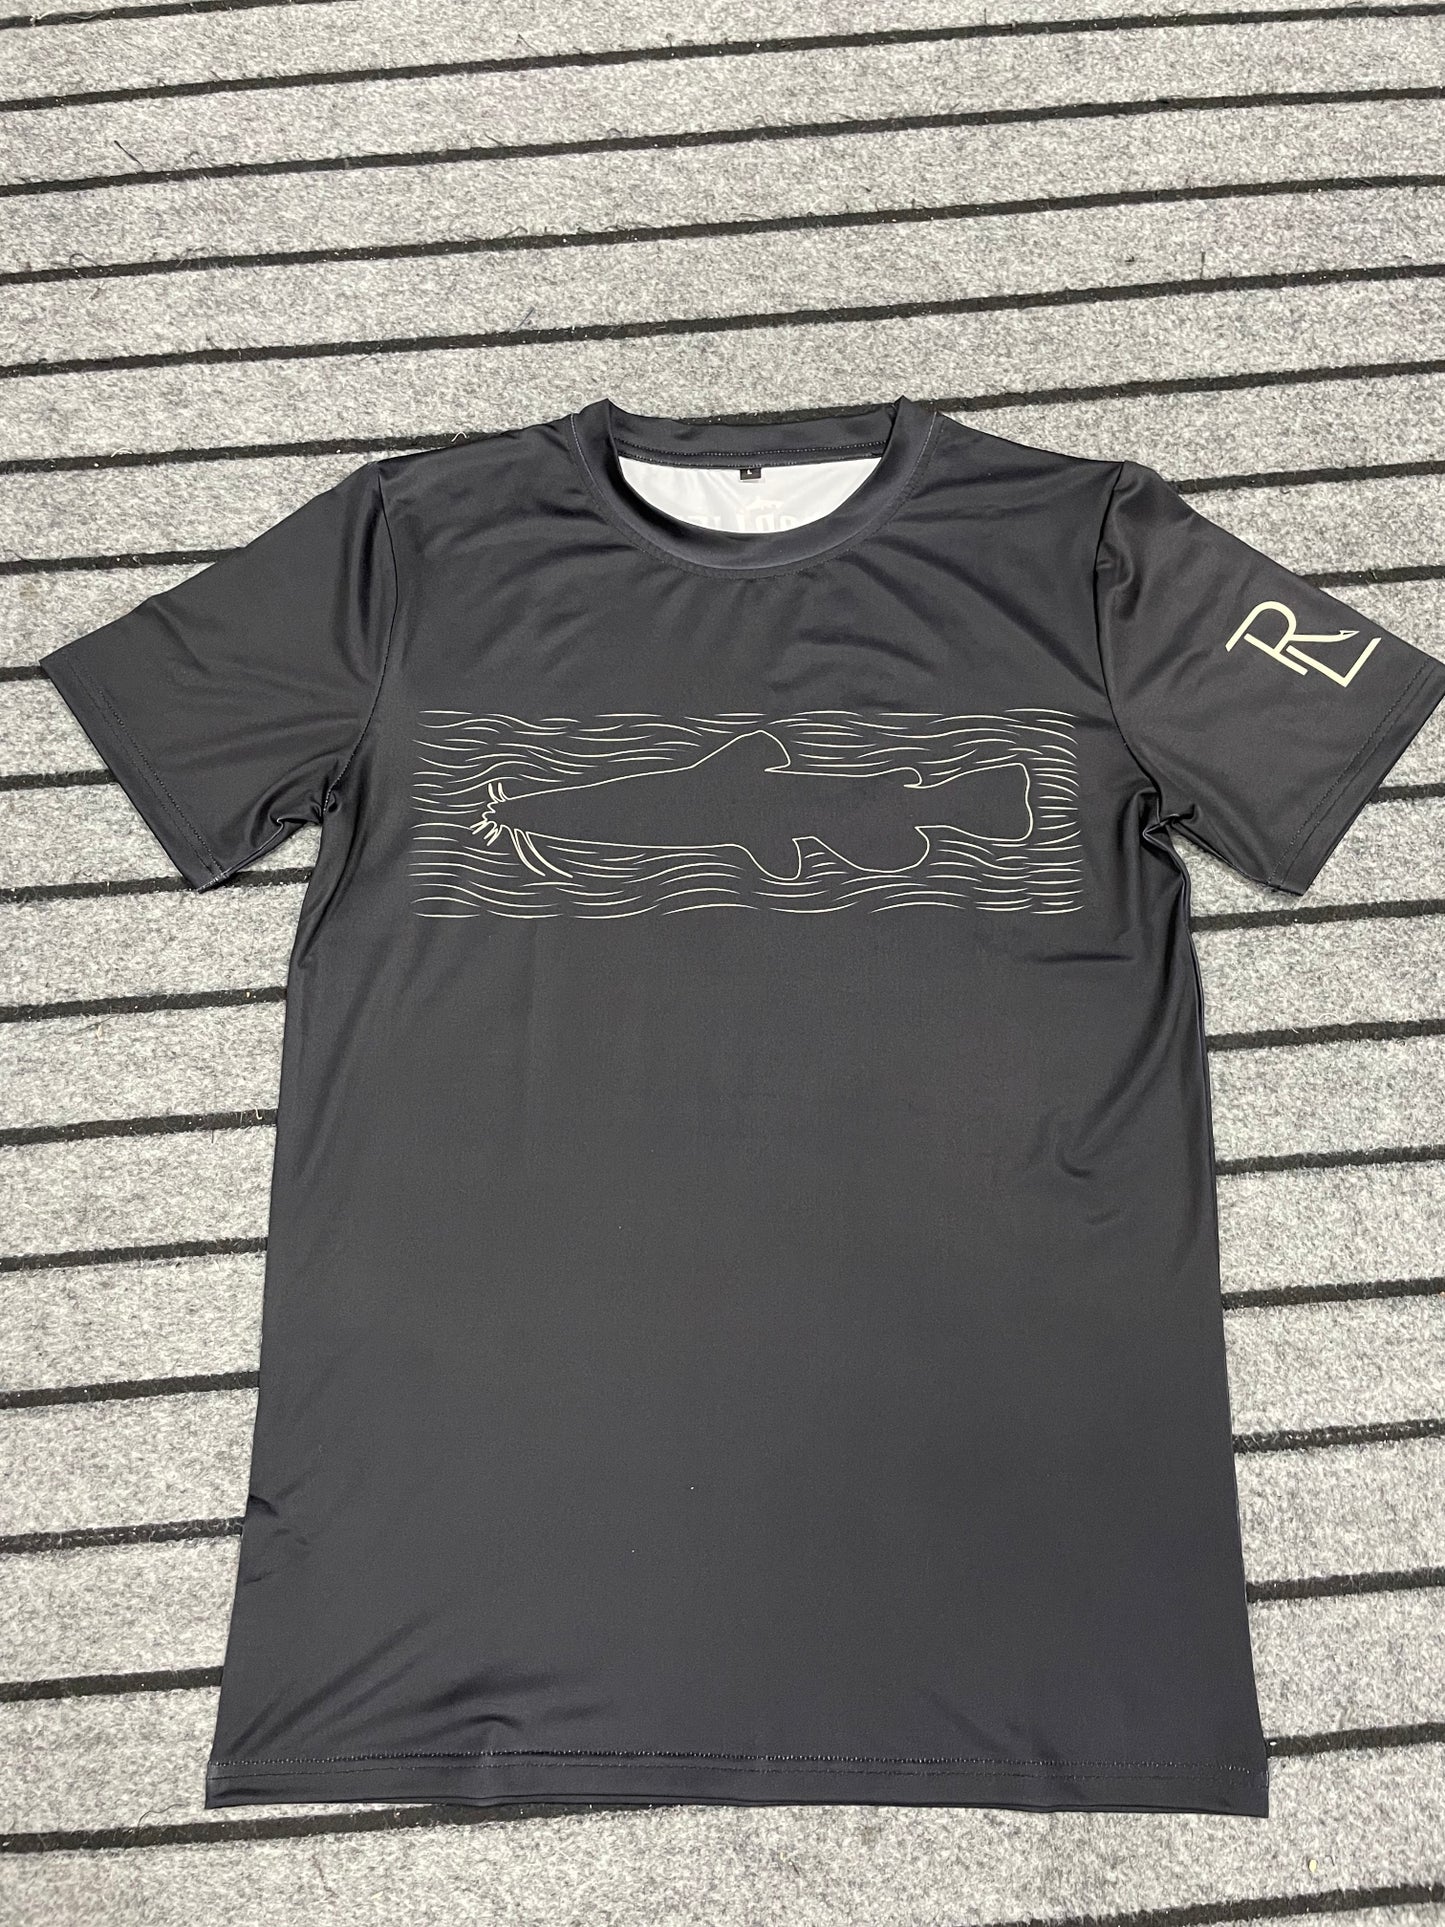 Flathead Catfish Outline T-Shirt - Black